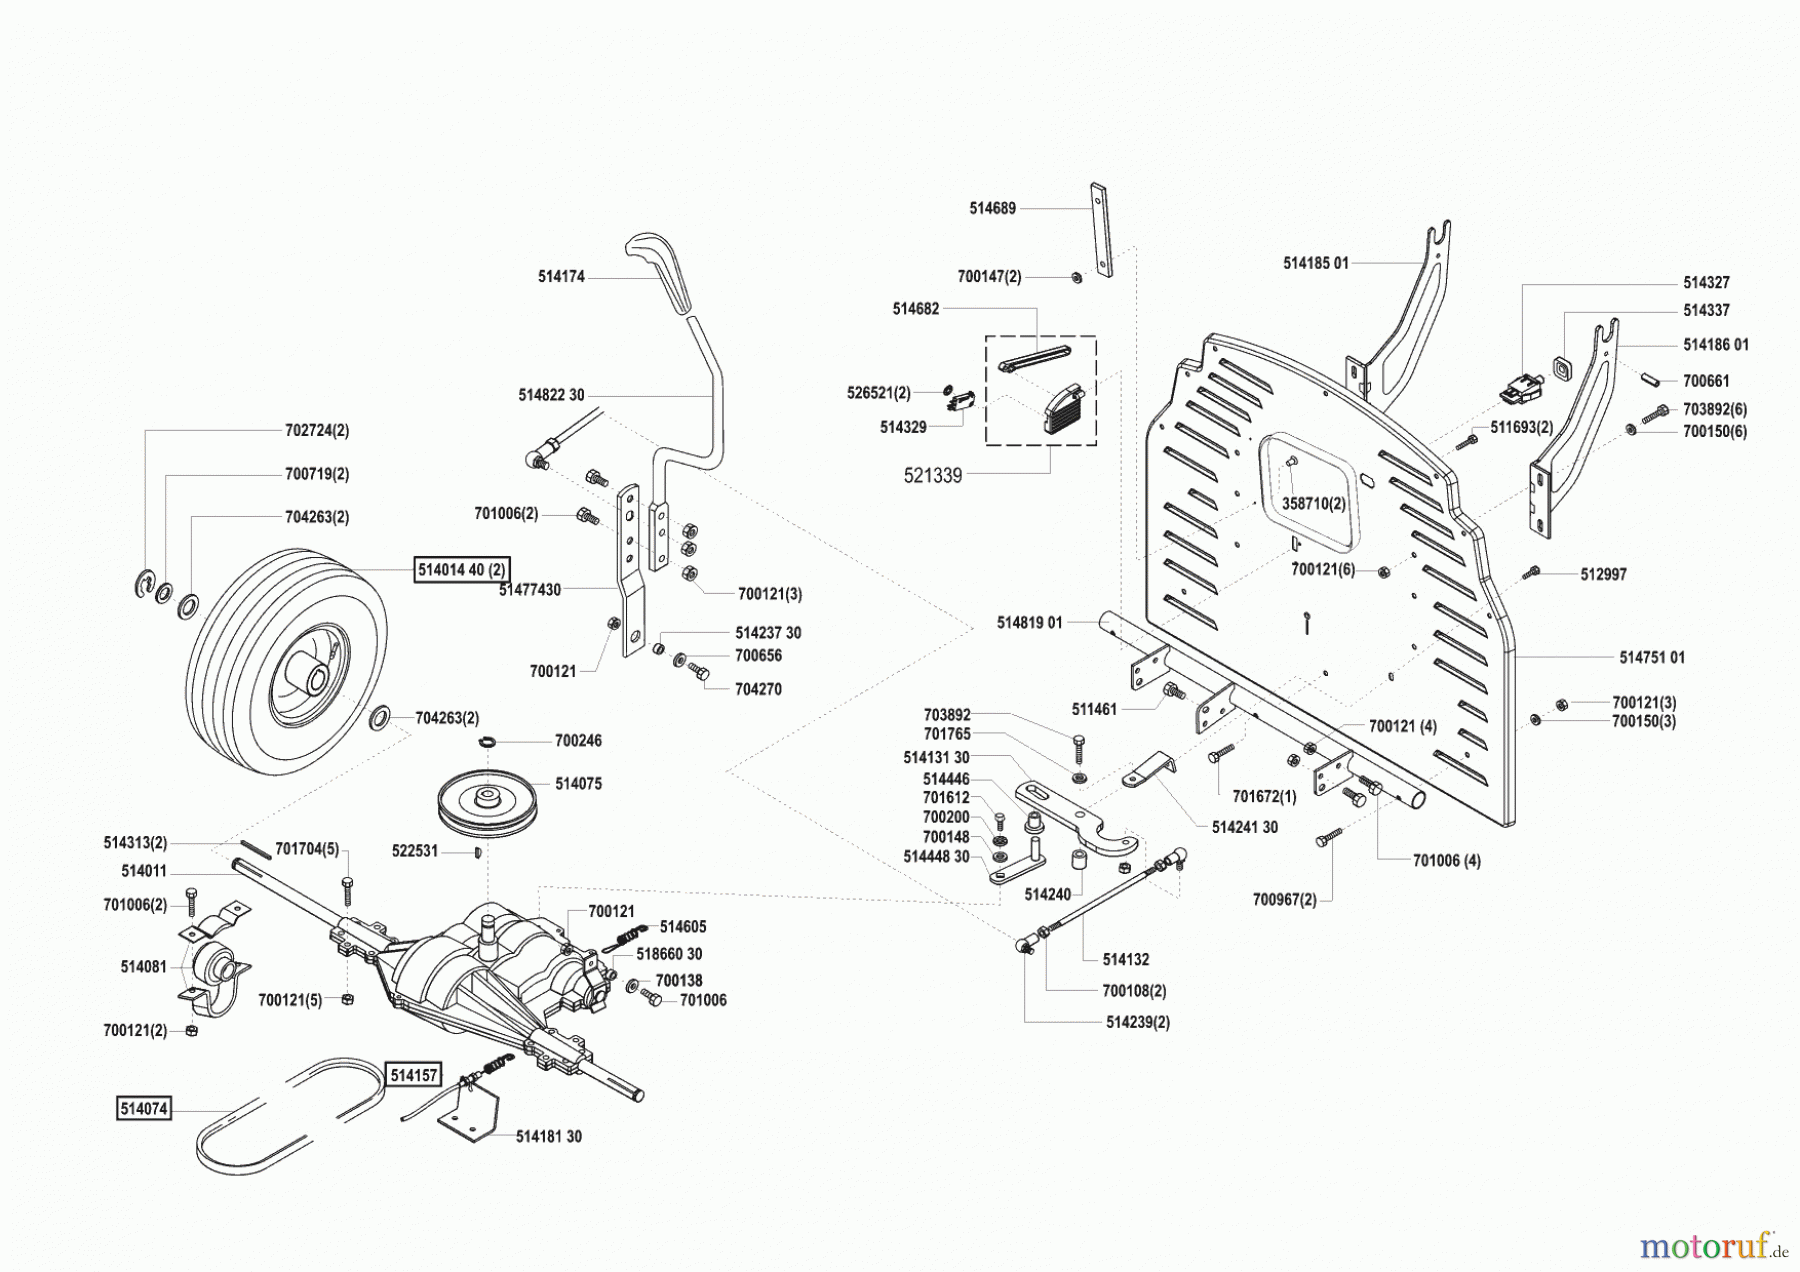  AL-KO Gartentechnik Rasentraktor T 10 vor 12/2001 Seite 3